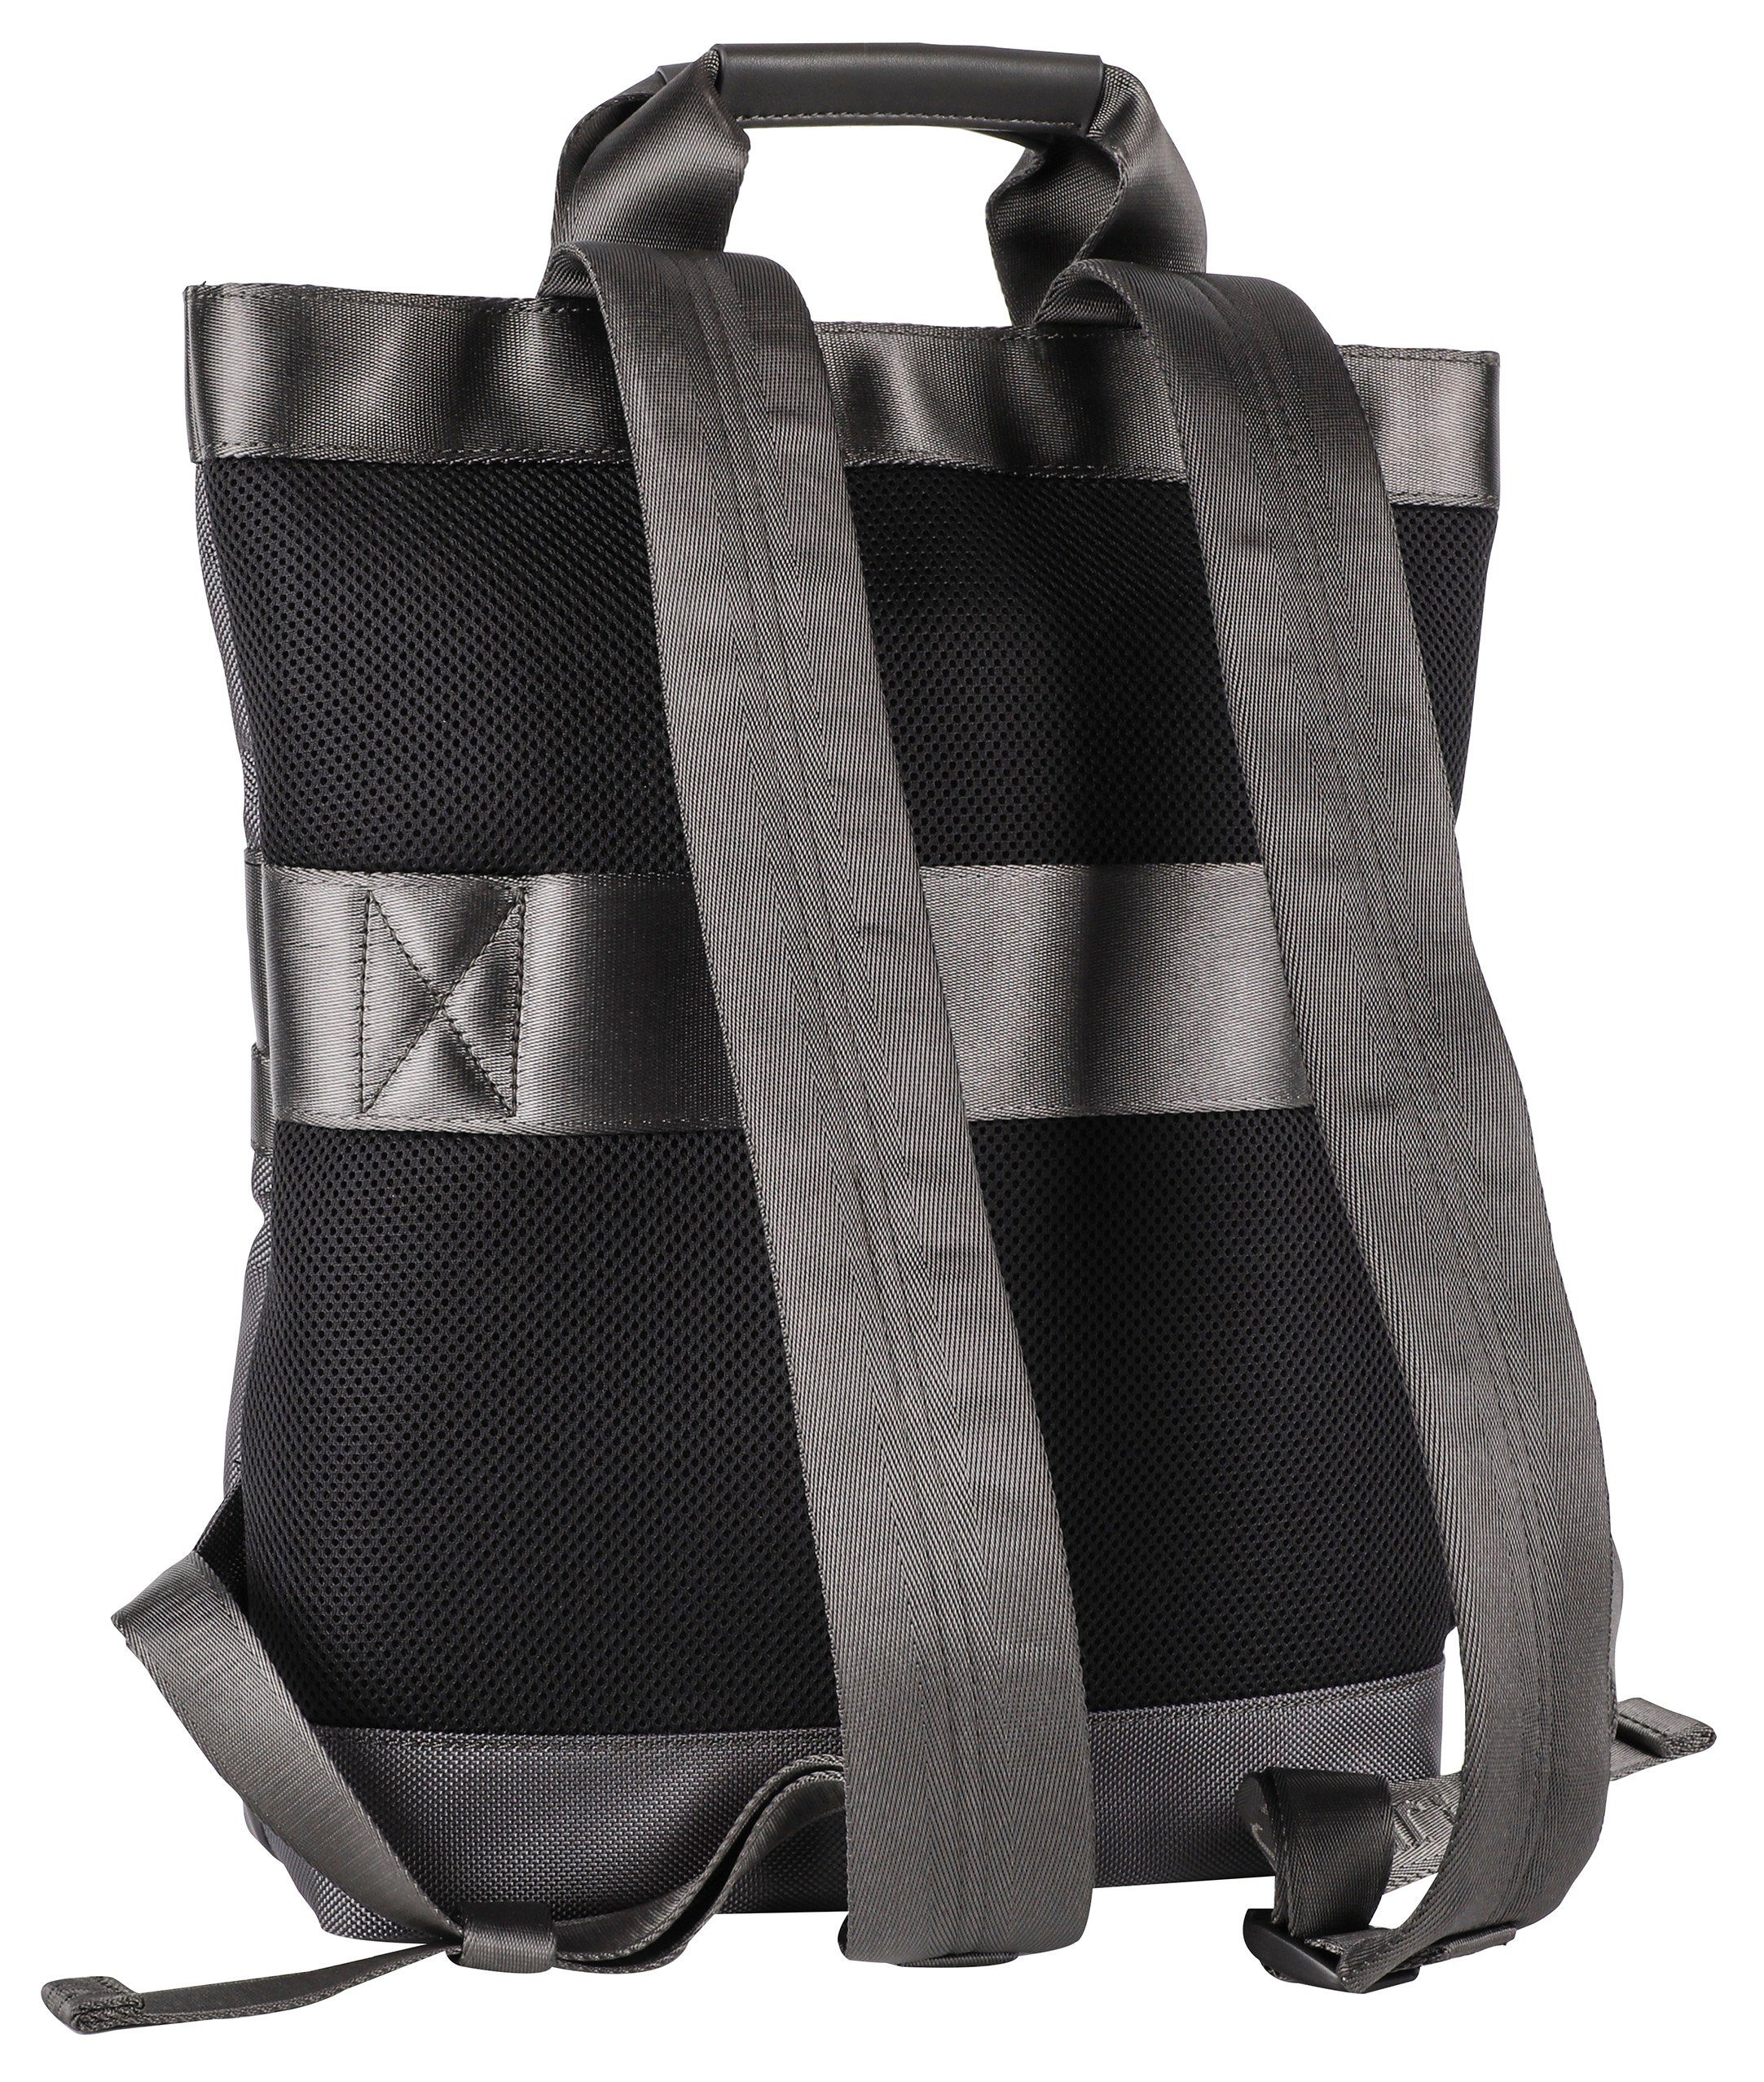 svz, Cityrucksack dunkelgrau backpack mit Jeans Reißverschluss-Vortasche Joop falk modica